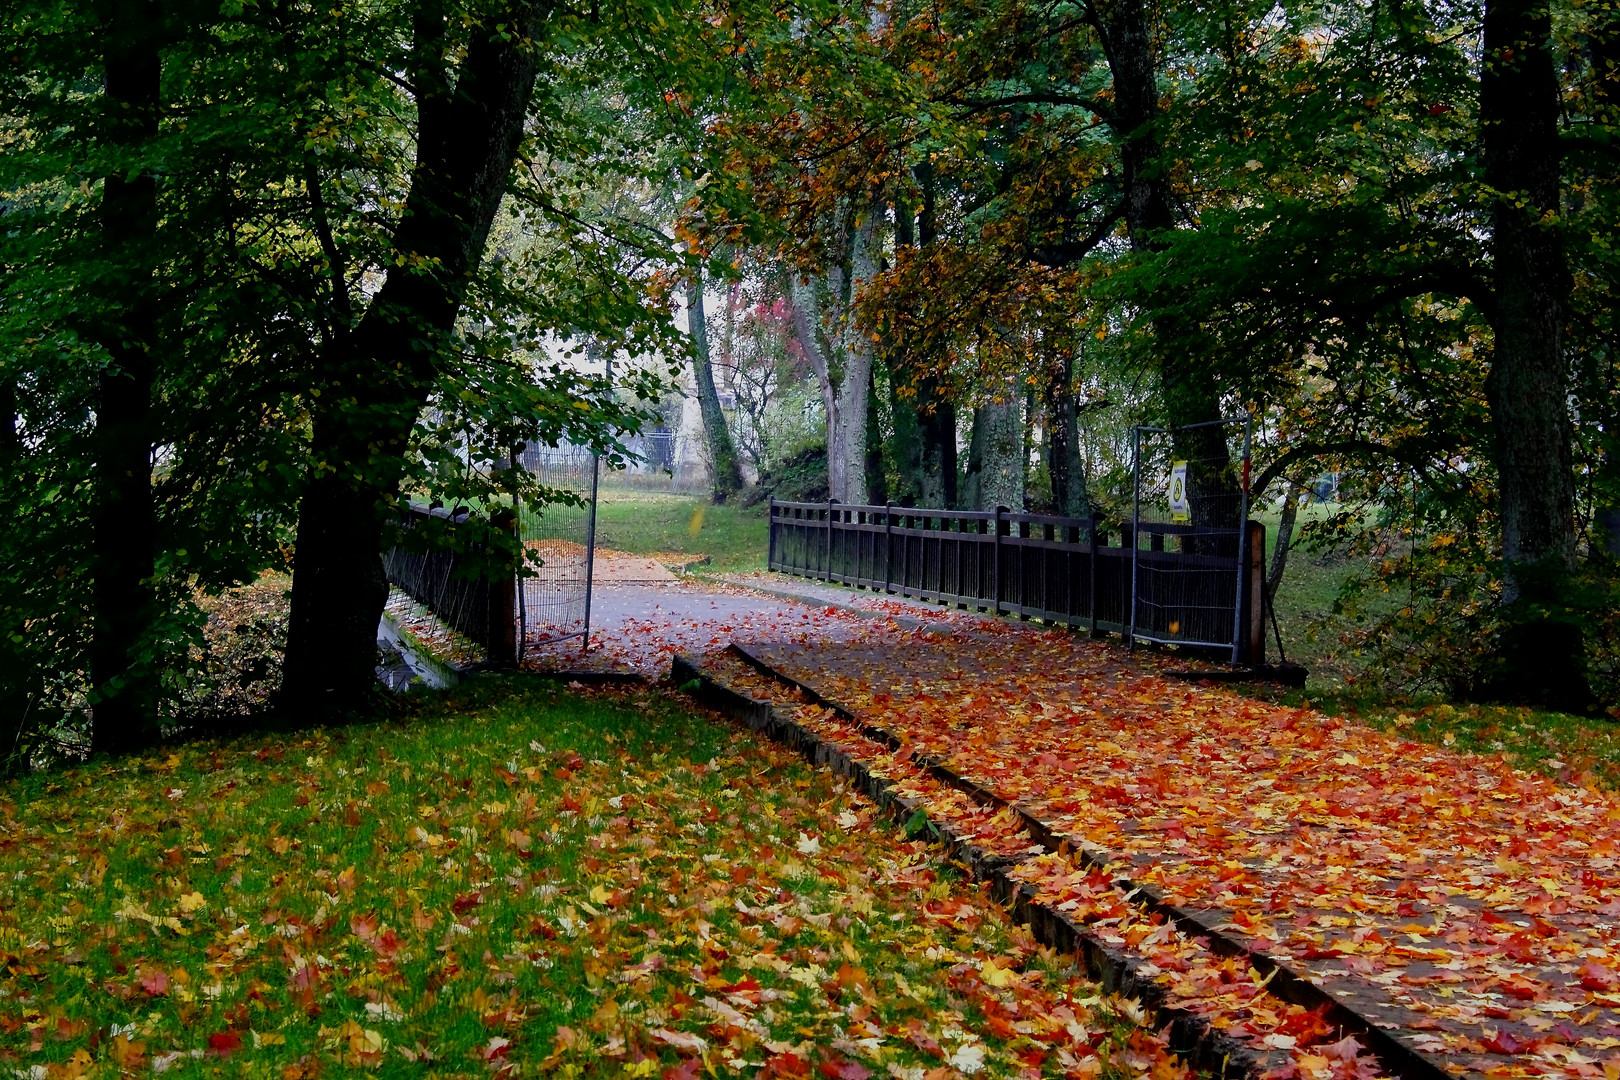 Herbst in Litauen